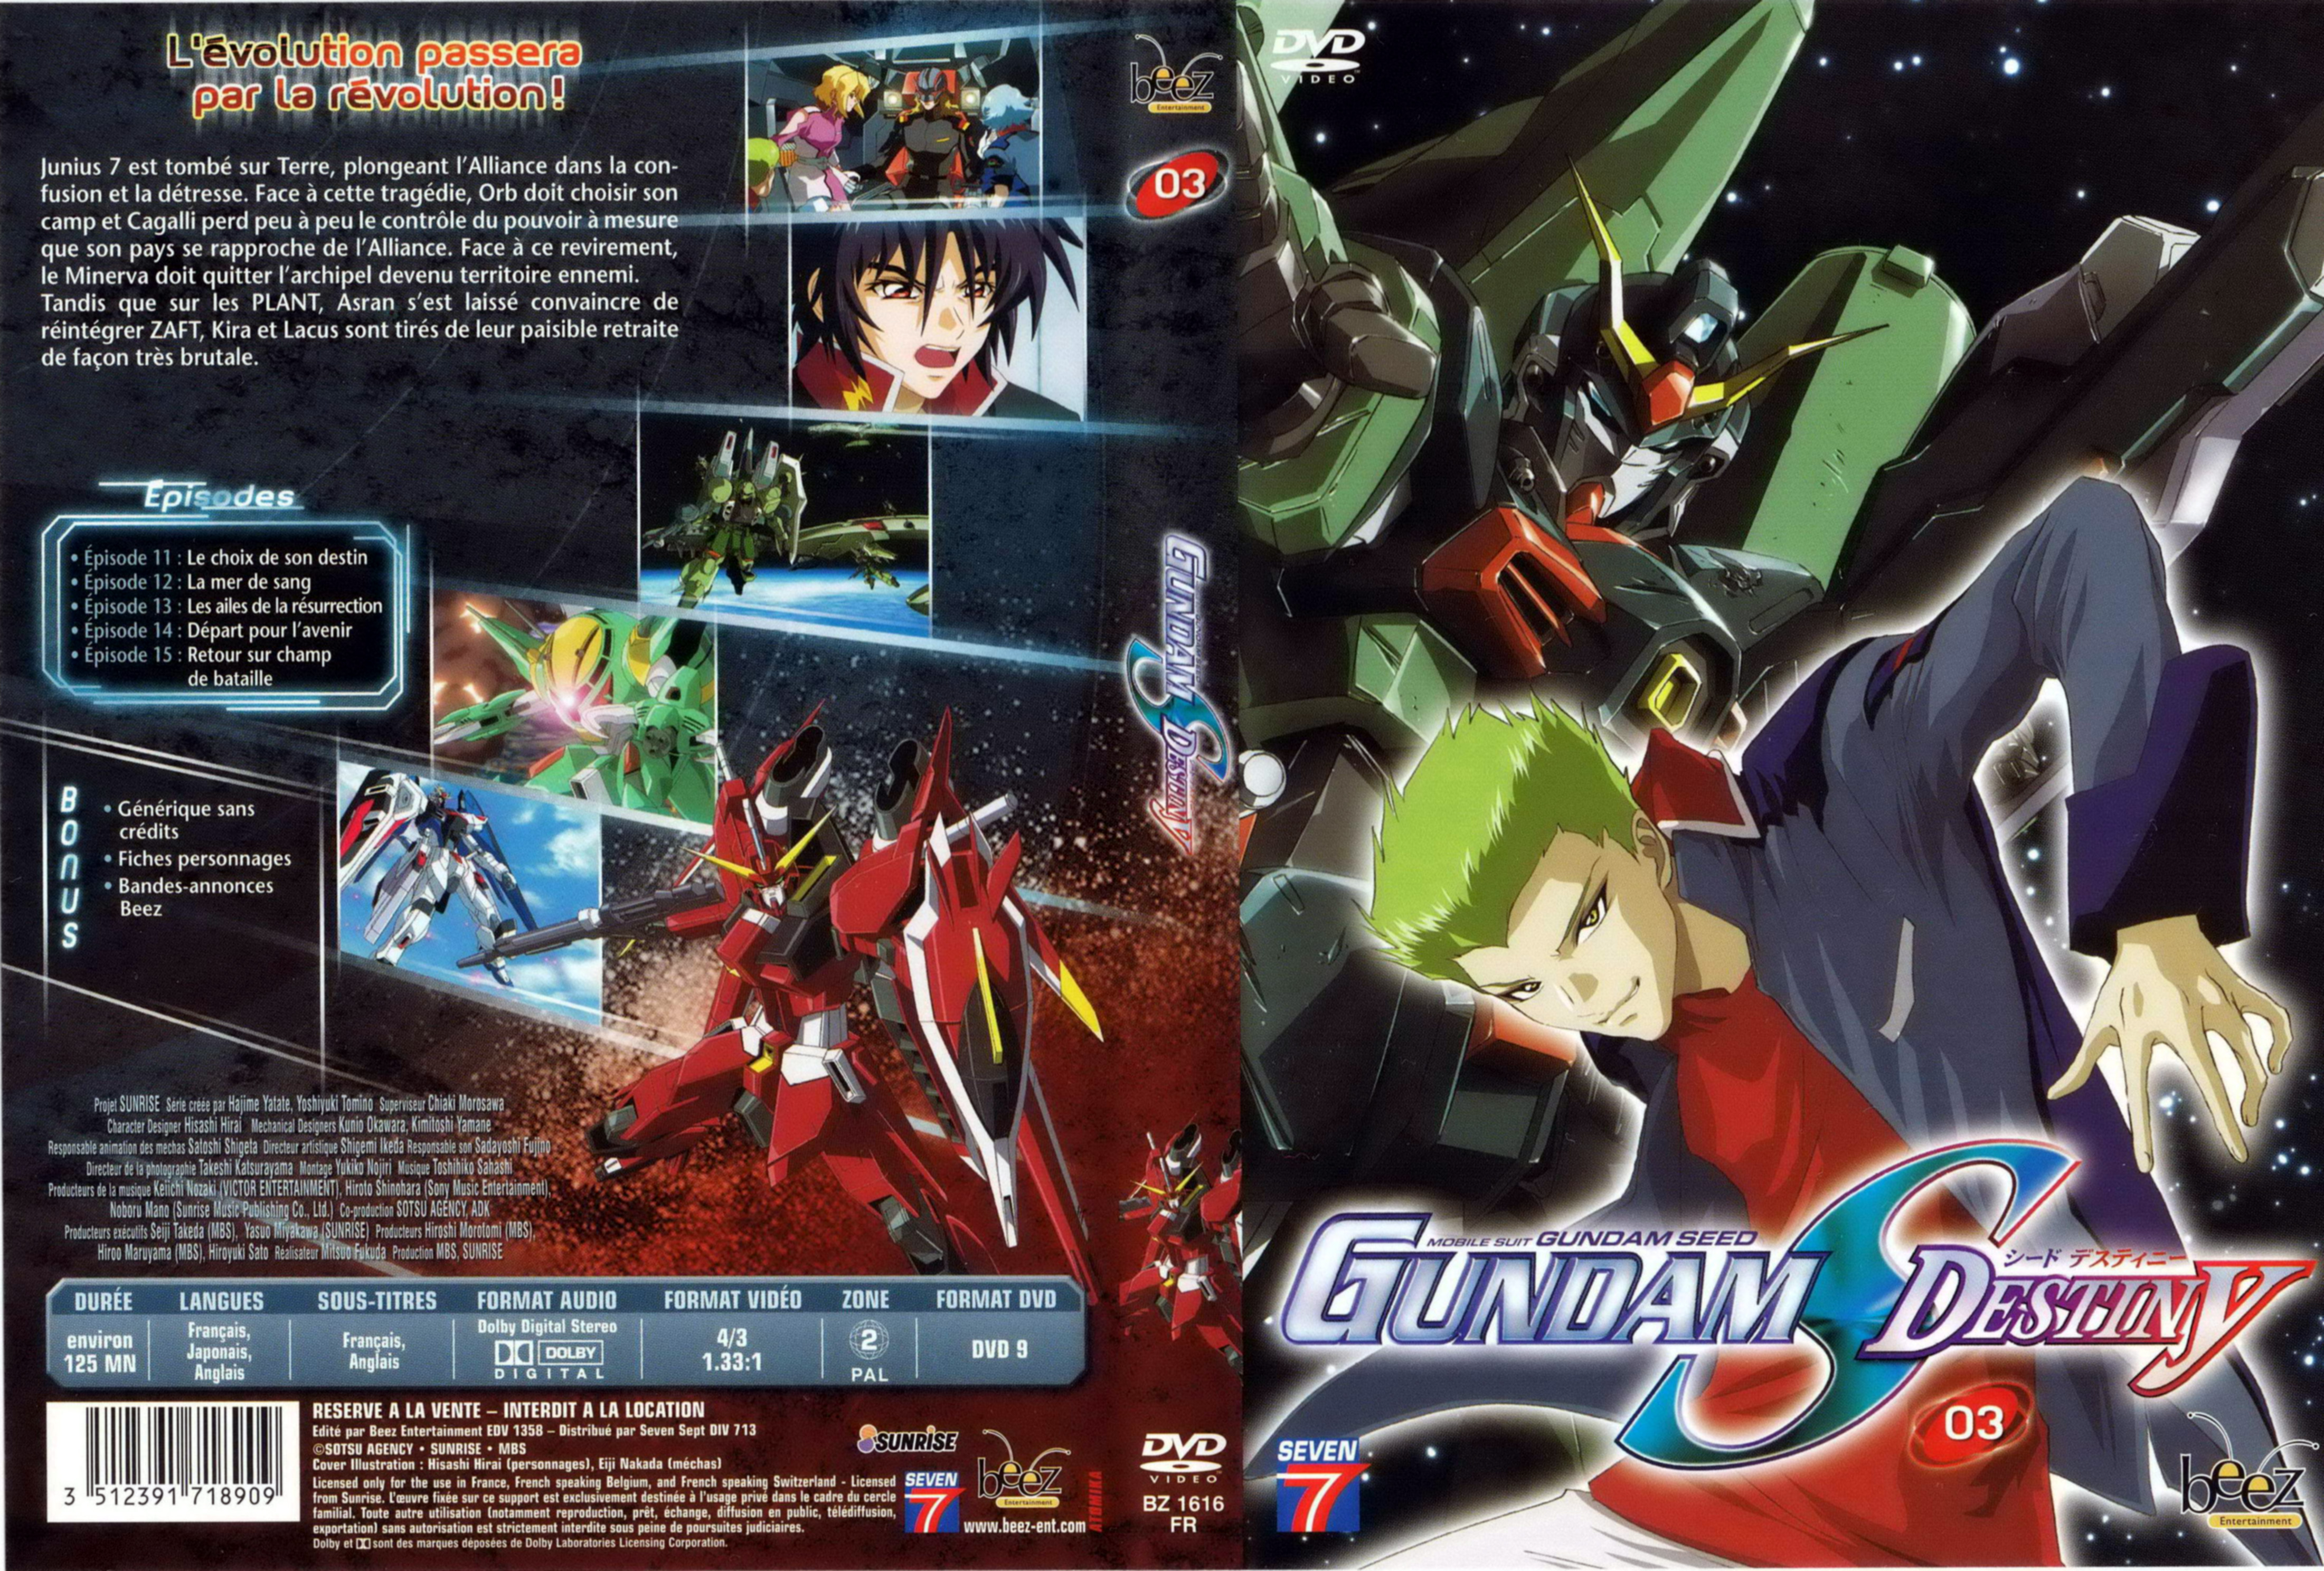 Jaquette DVD Gundam destiny vol 03